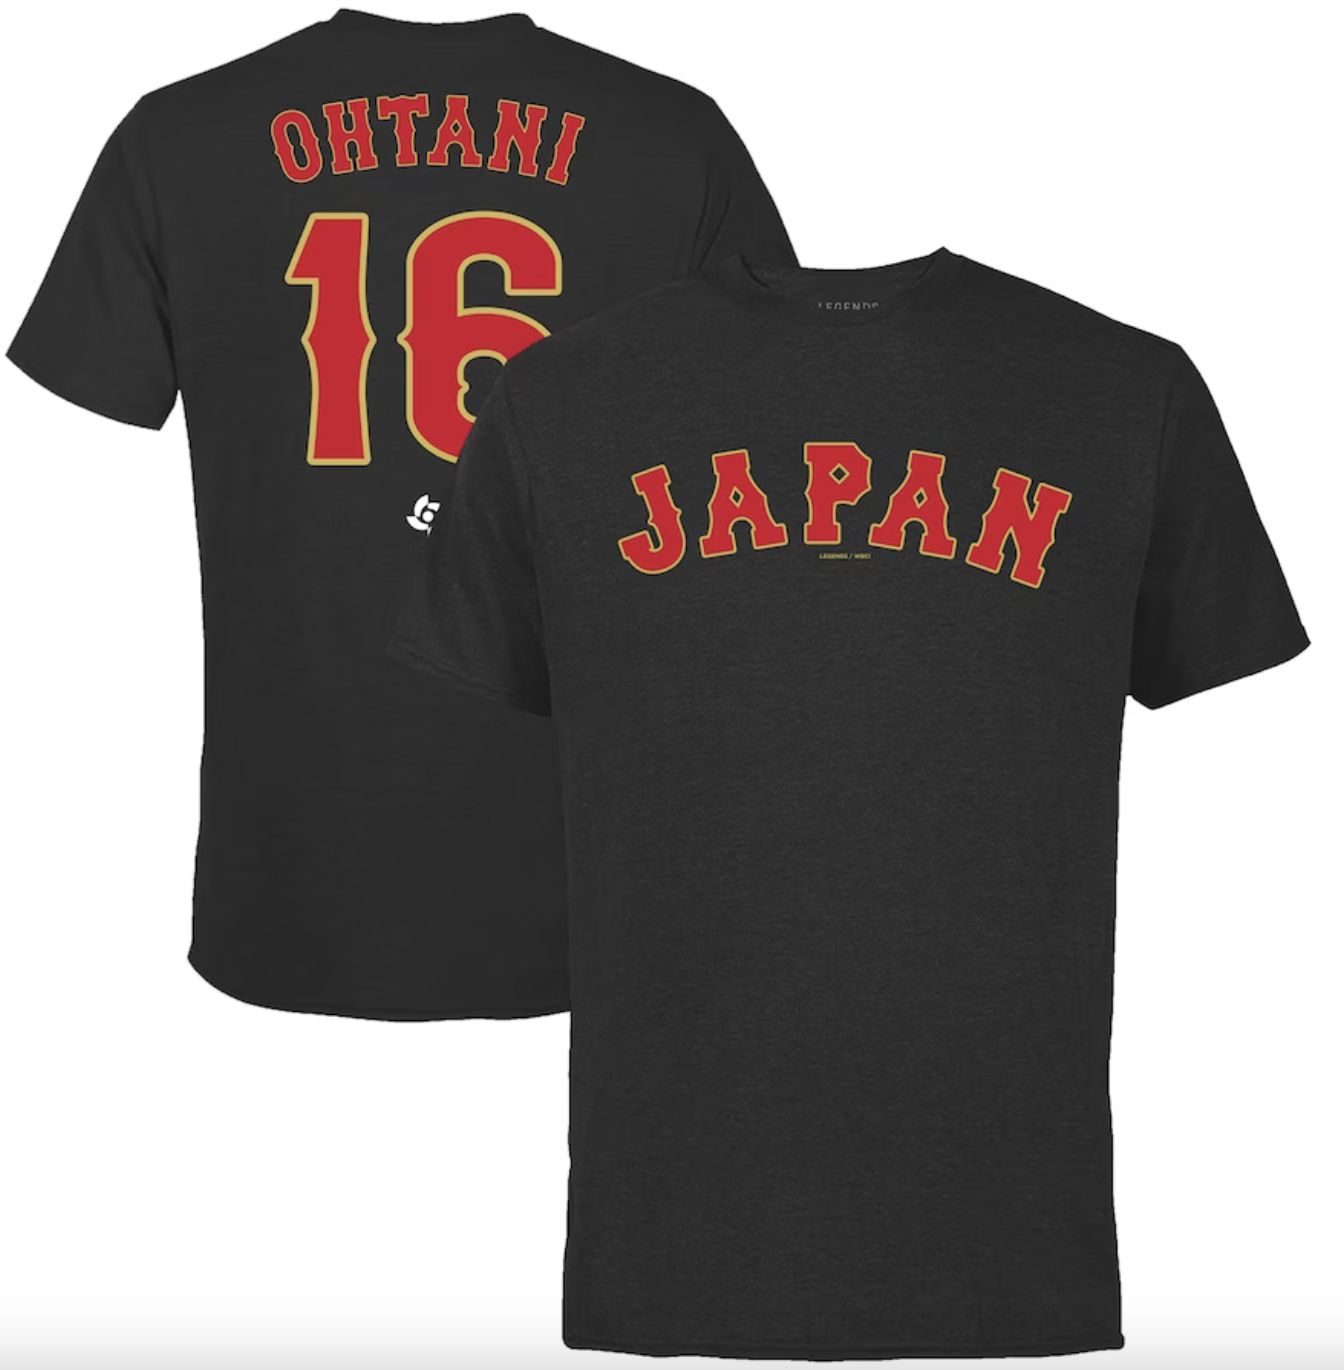 Shop Ohtani Jersey online